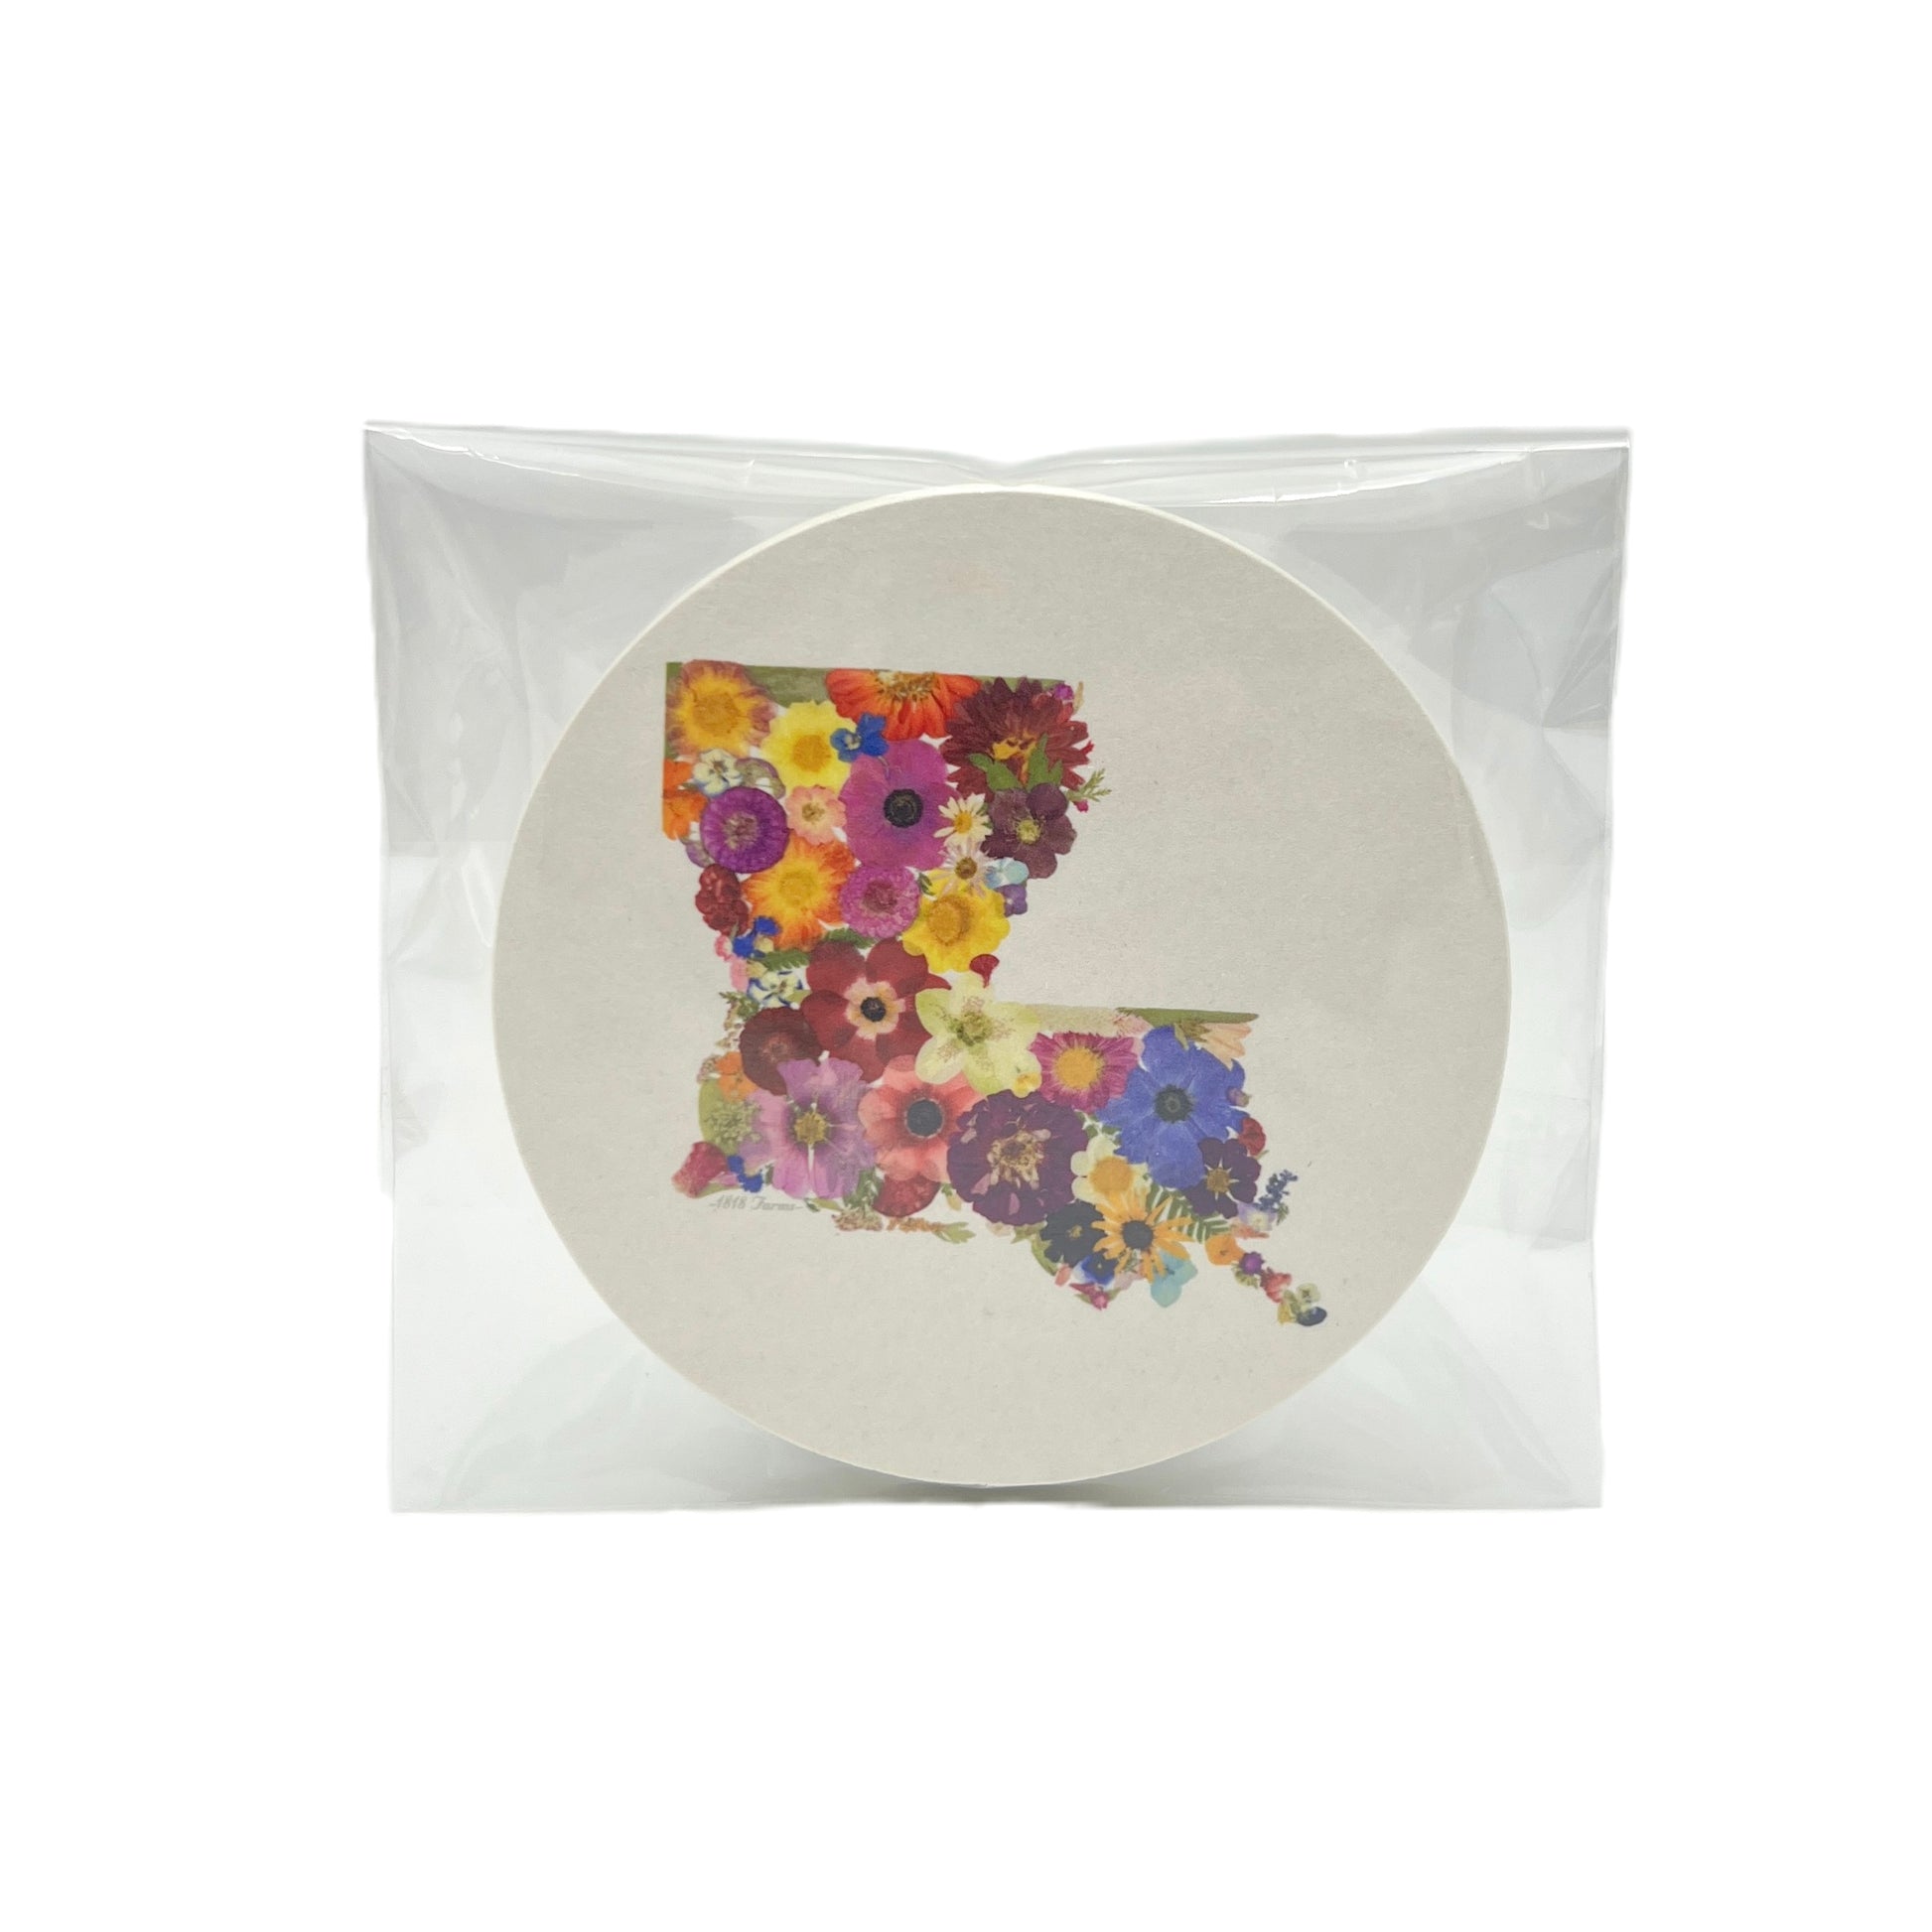 Louisiana Themed Coasters (Set of 6)  - "Where I Bloom" Collection Coaster 1818 Farms   